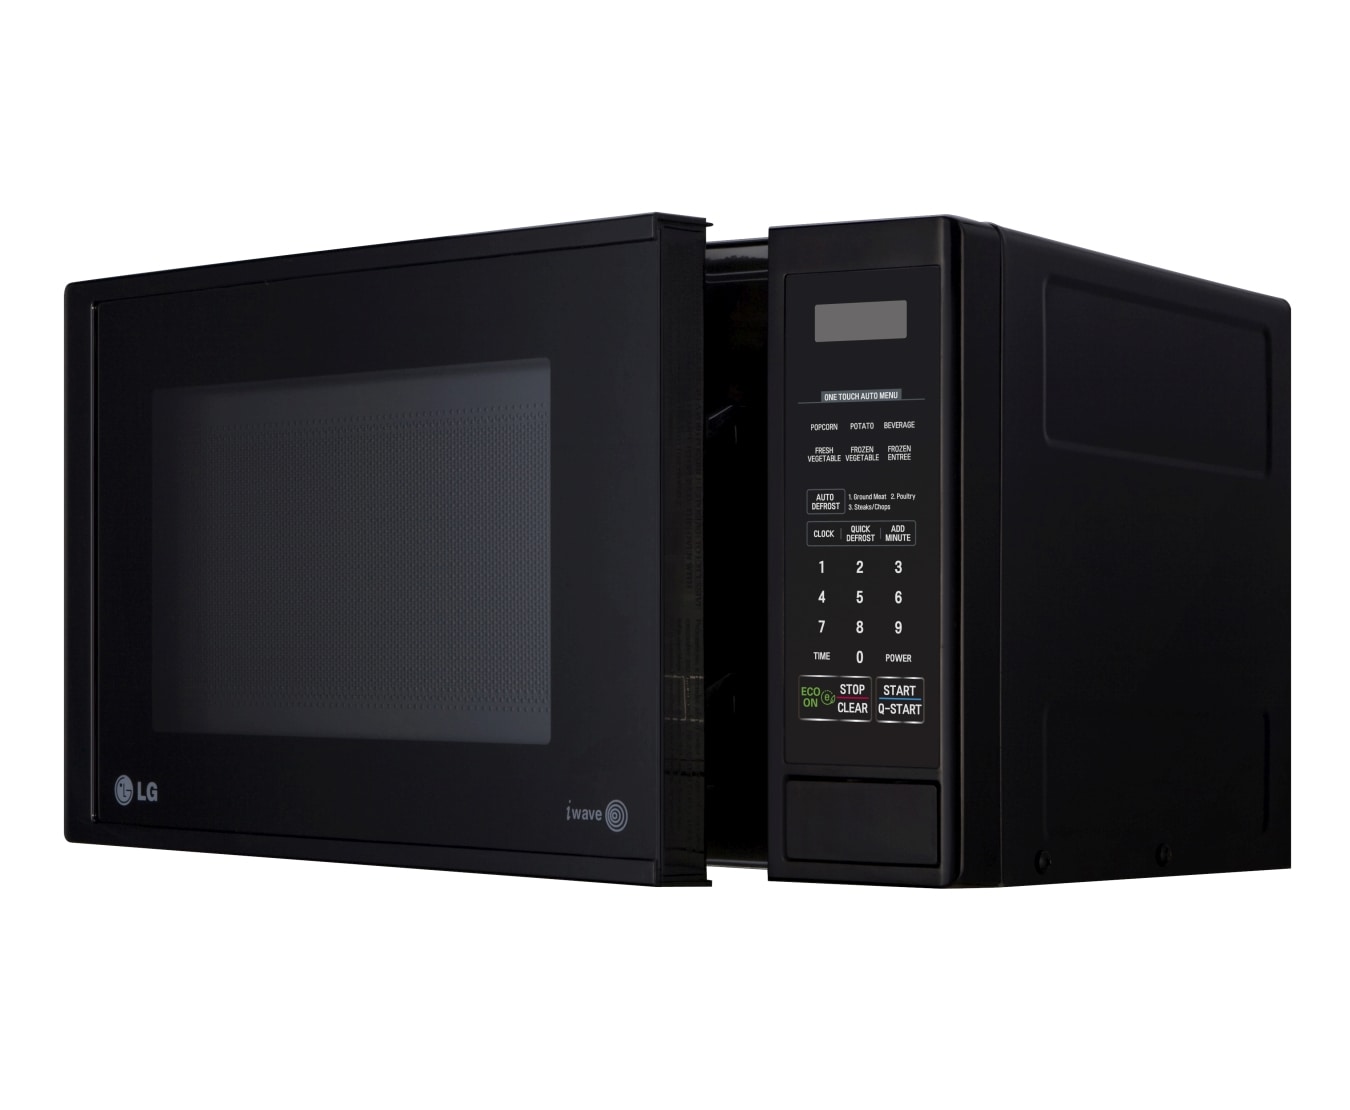 MS2042DB - 20L Black Microwave Oven | LG Australia